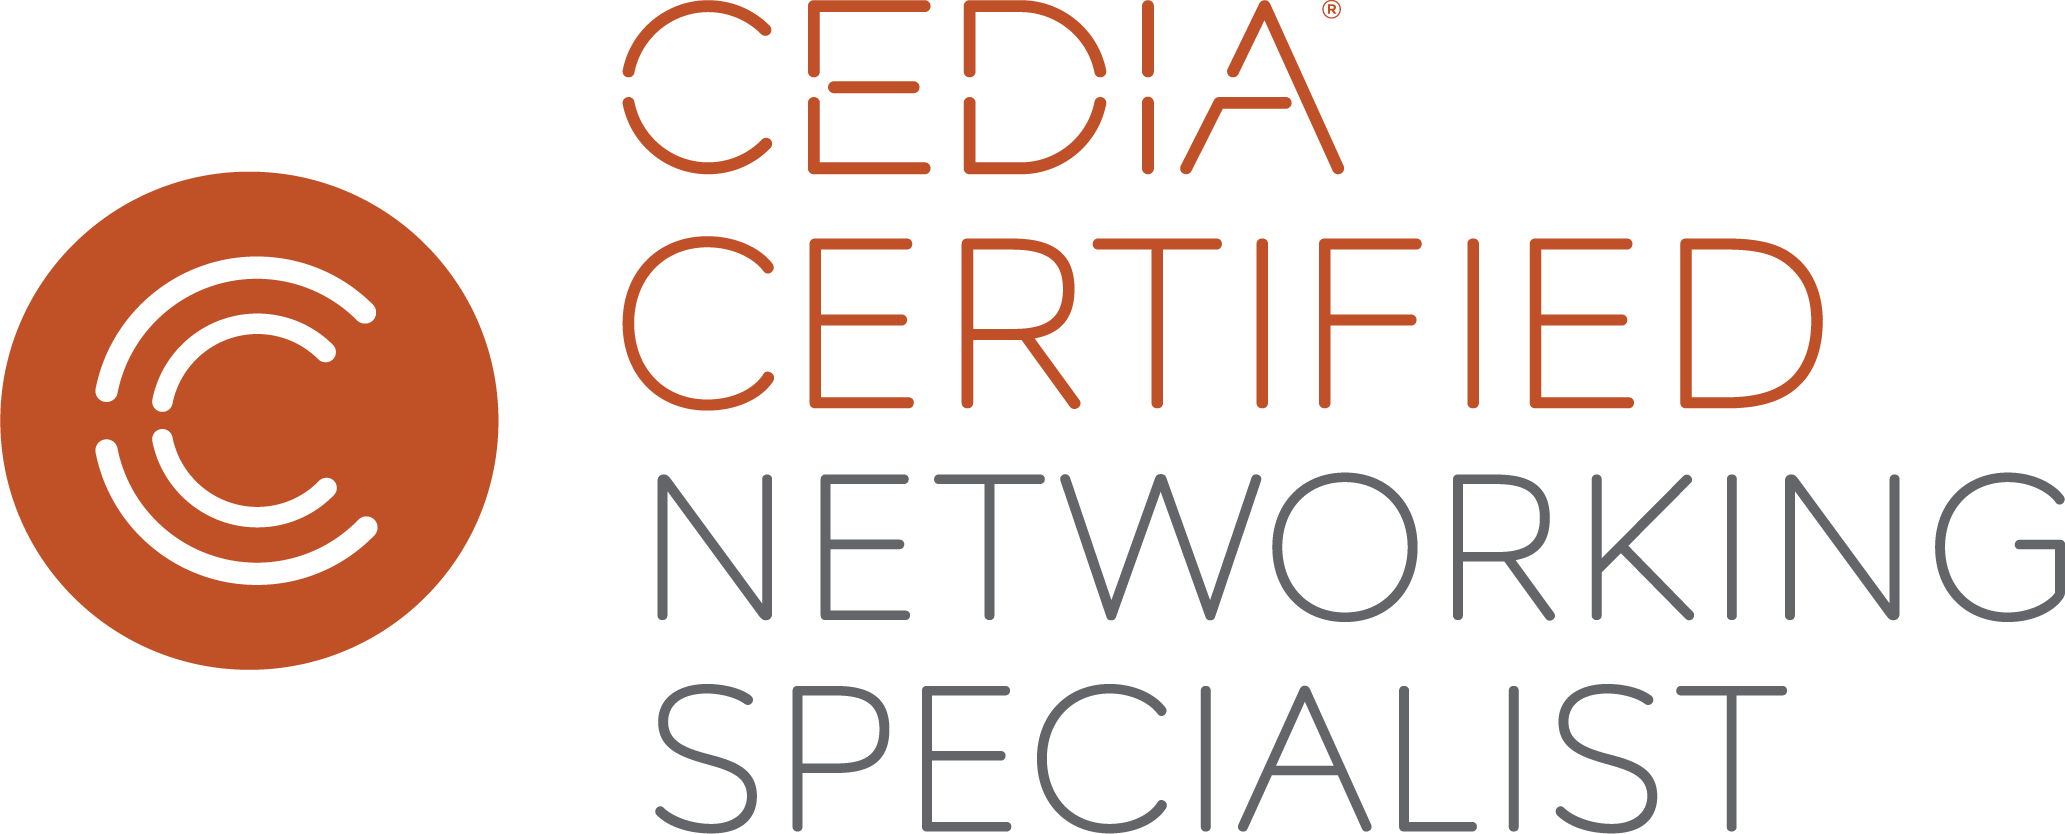 CEDIA - Certified Networking Specialist